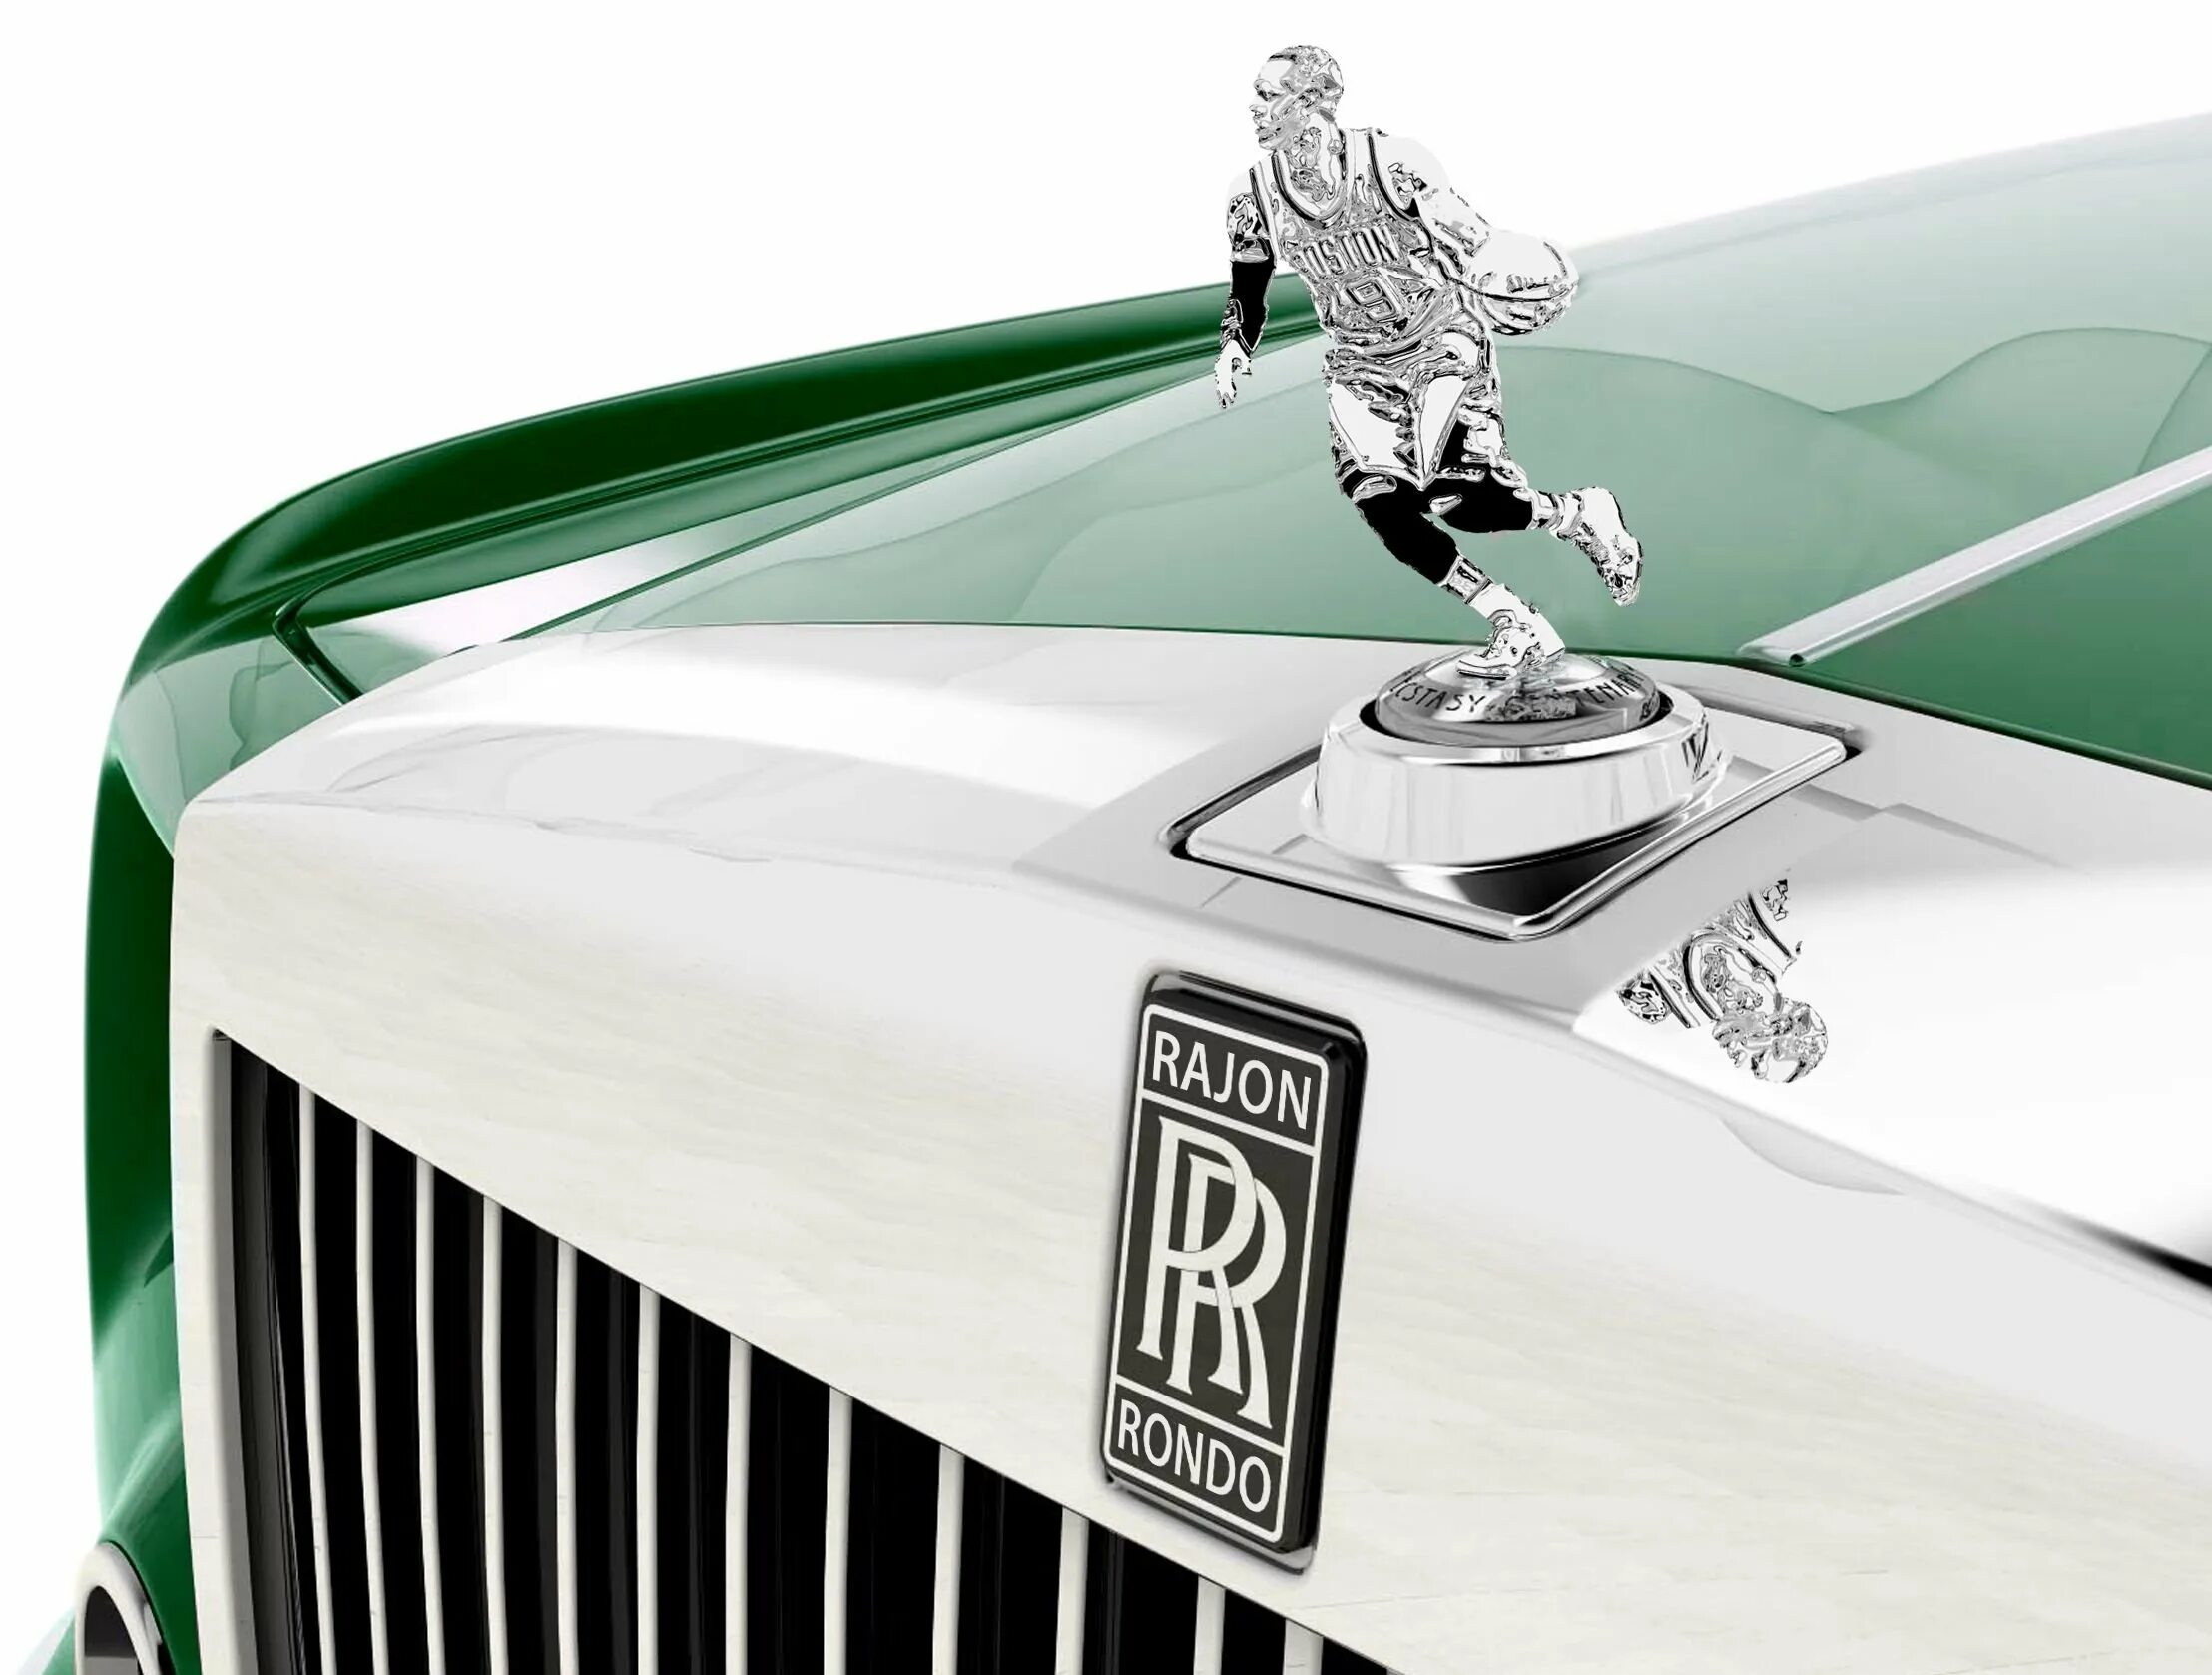 Значки на капоте машины. Rolls Royce капот. Rolls Royce значок на капоте. Бентли и Роллс Ройс. Роллс Ройс Фантом значок на капоте.